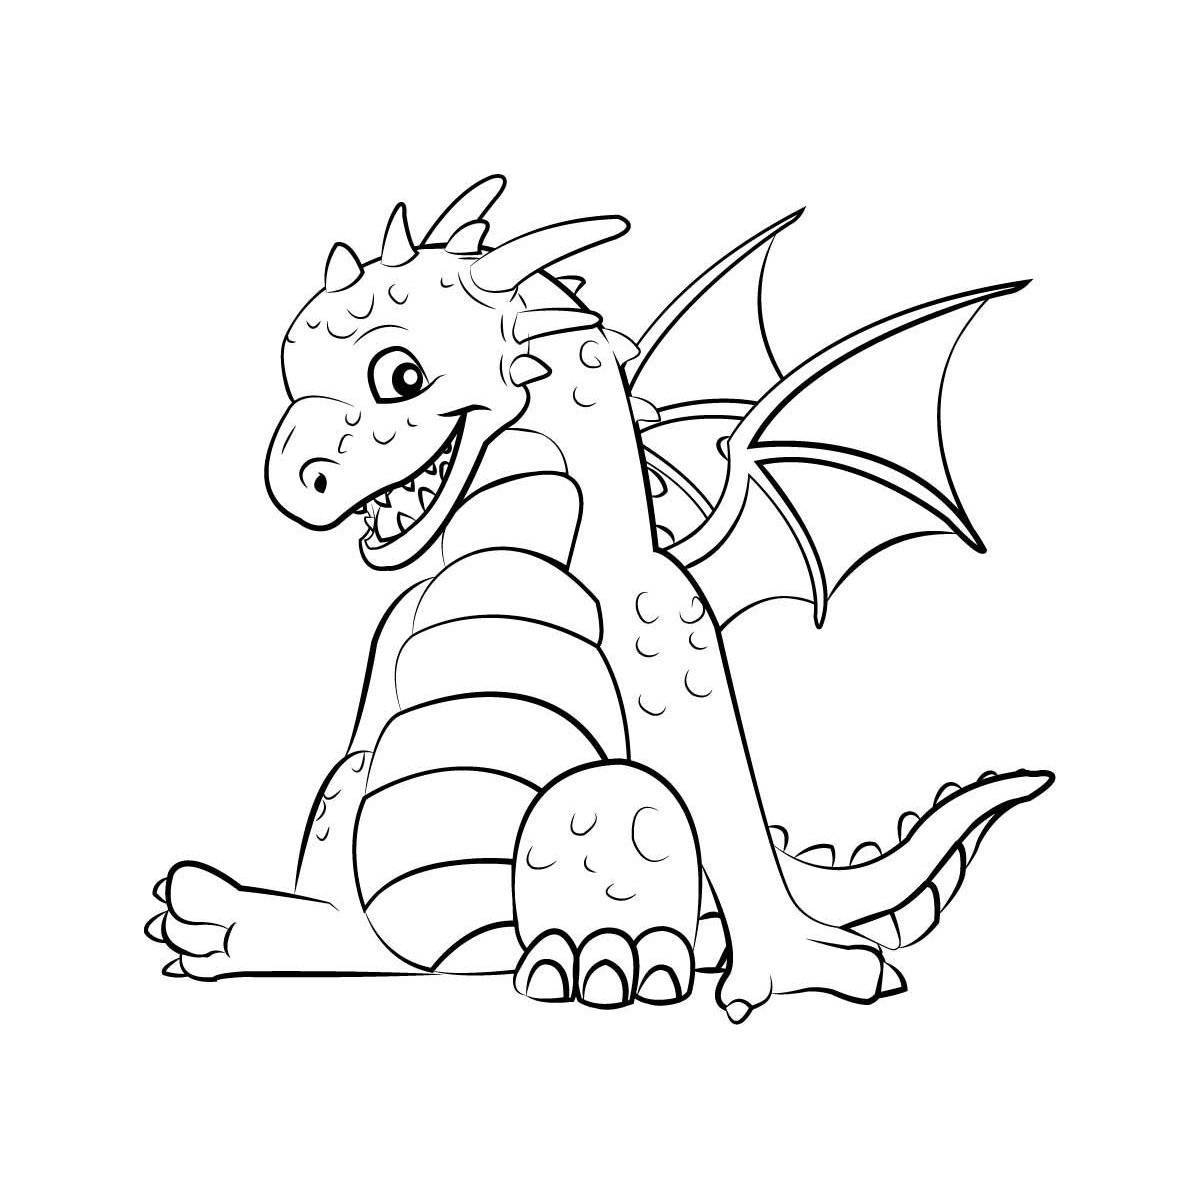 Children's dragon #3